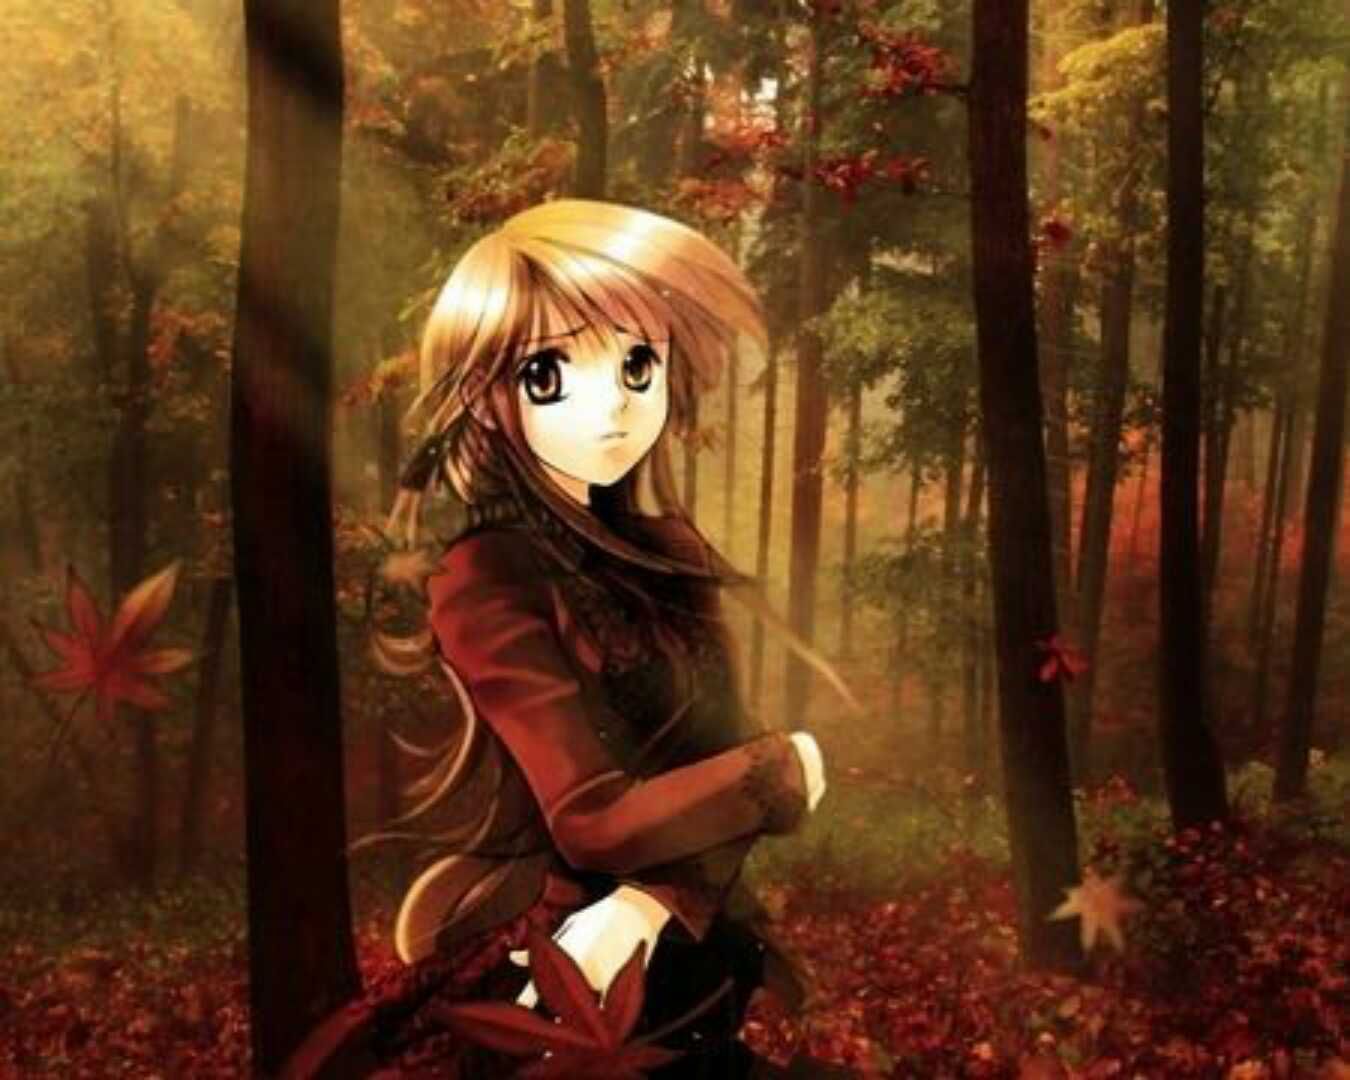 Anime. Anime scenery wallpaper, Anime scenery, Anime